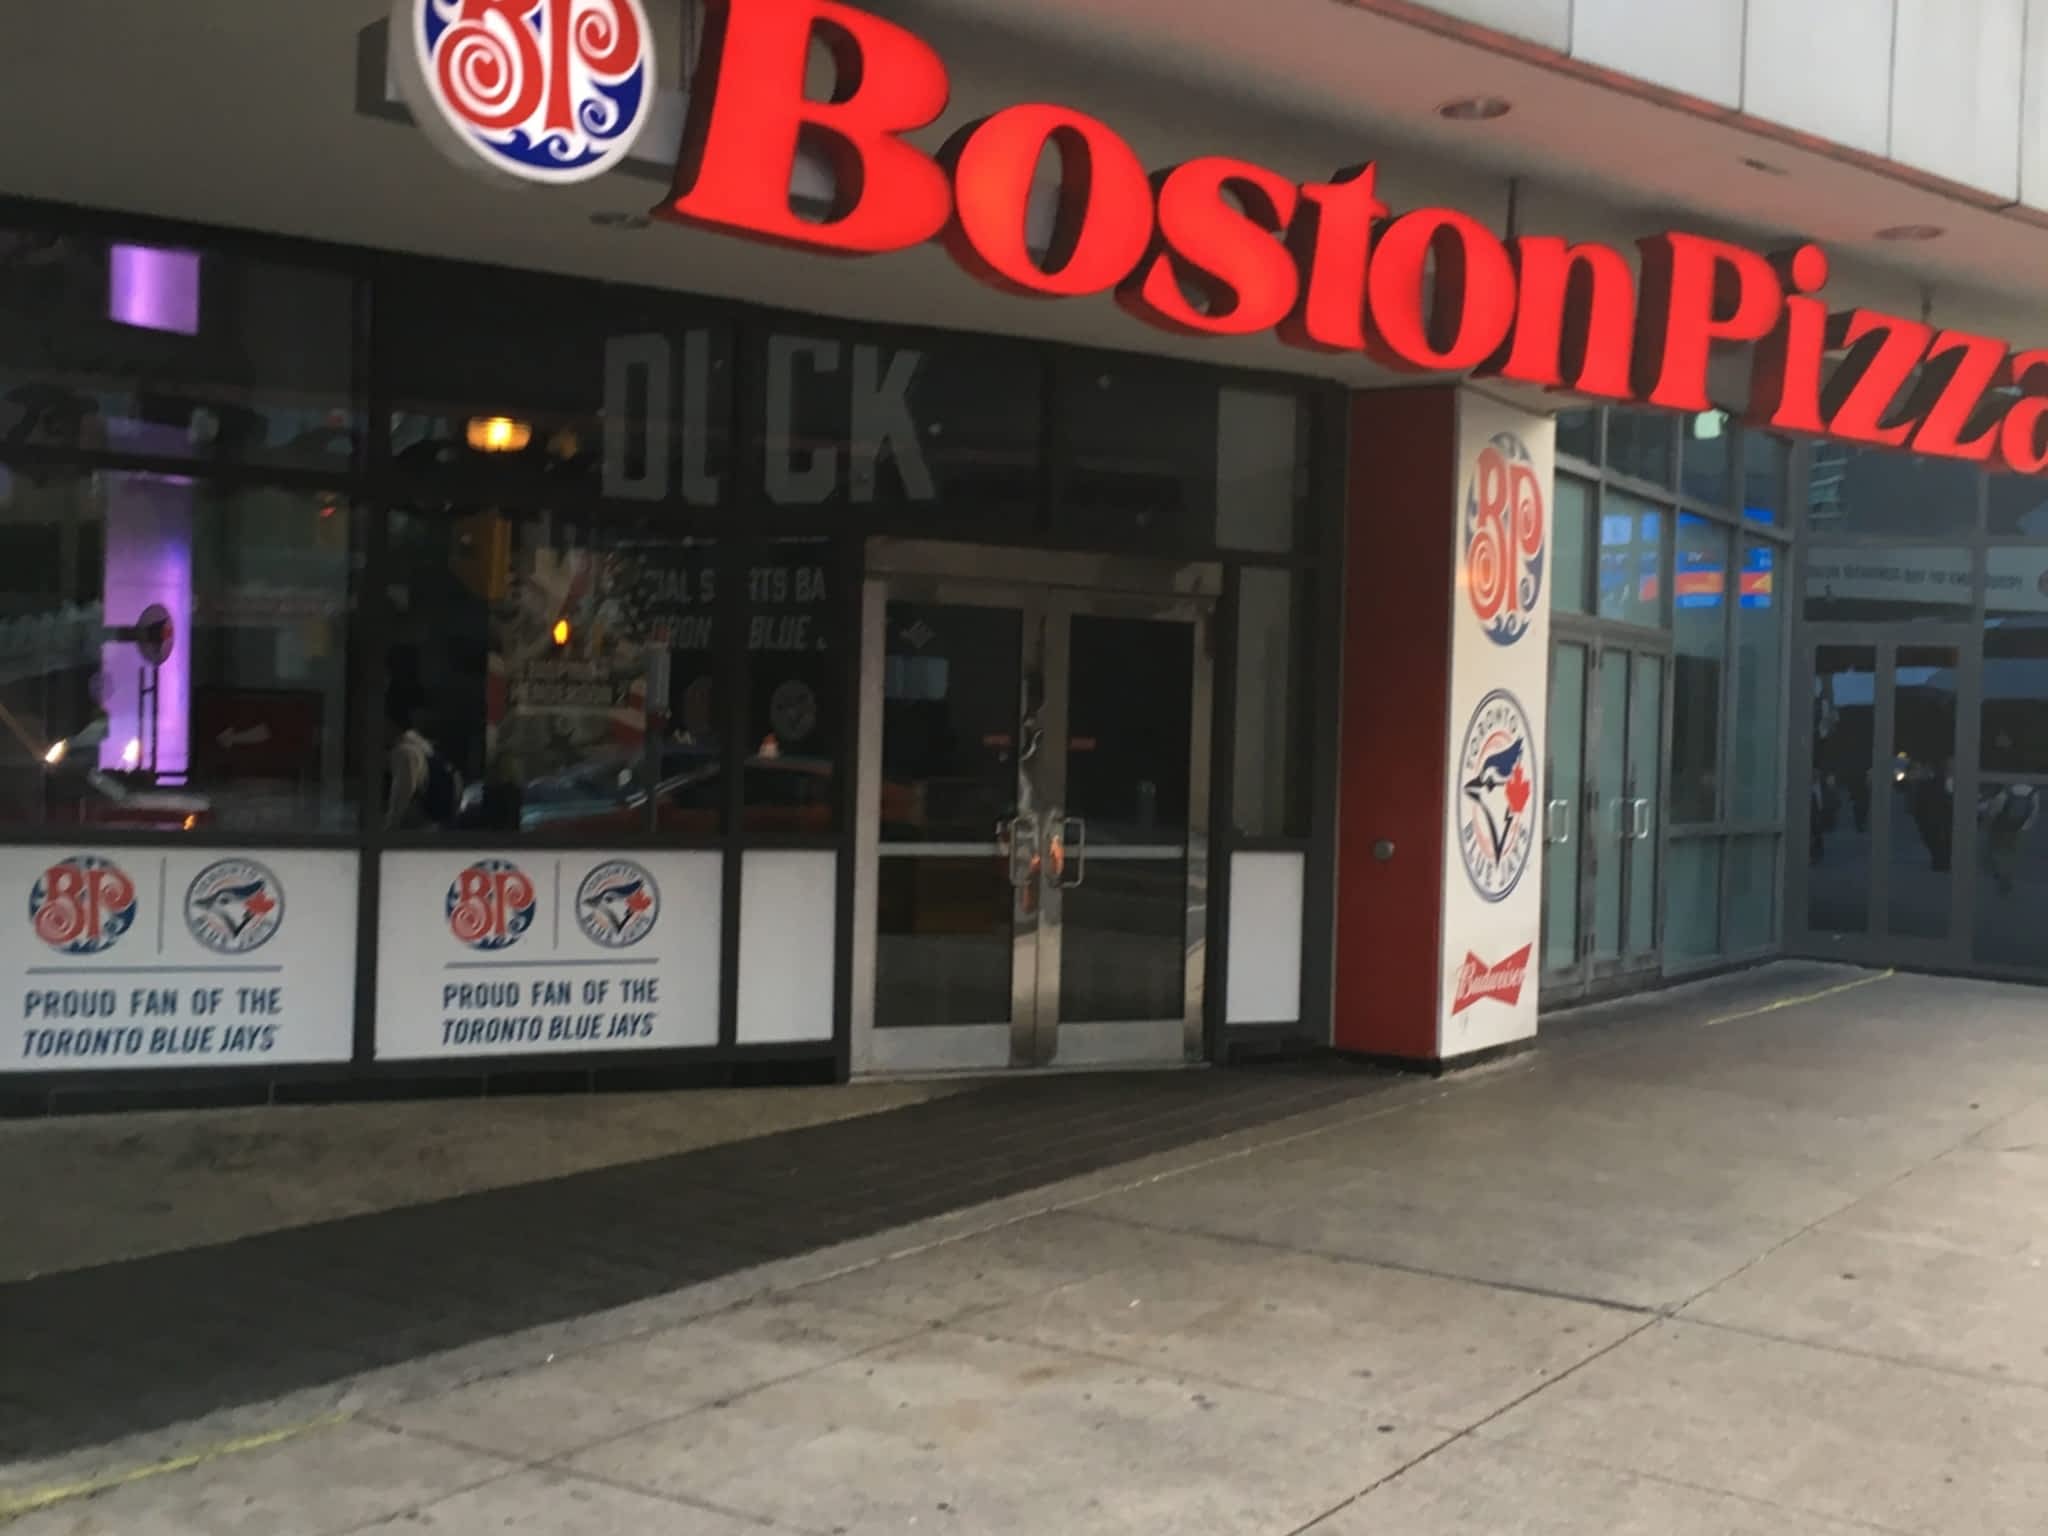 photo Boston Pizza